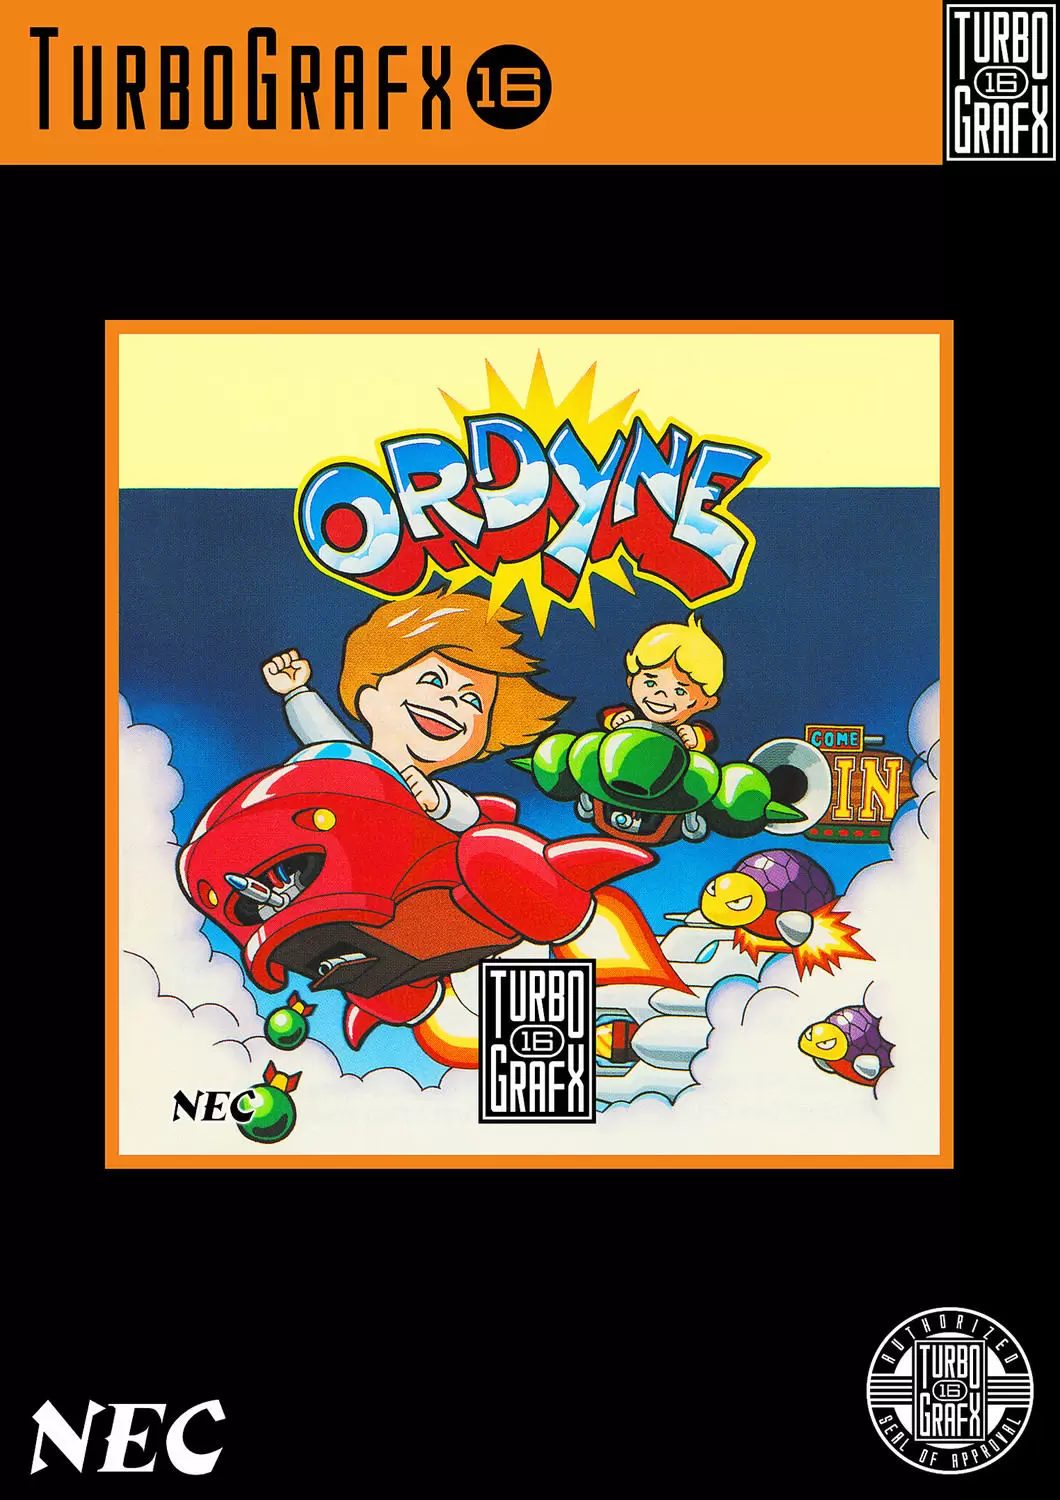 Turbo Grafx 16 - Ordyne